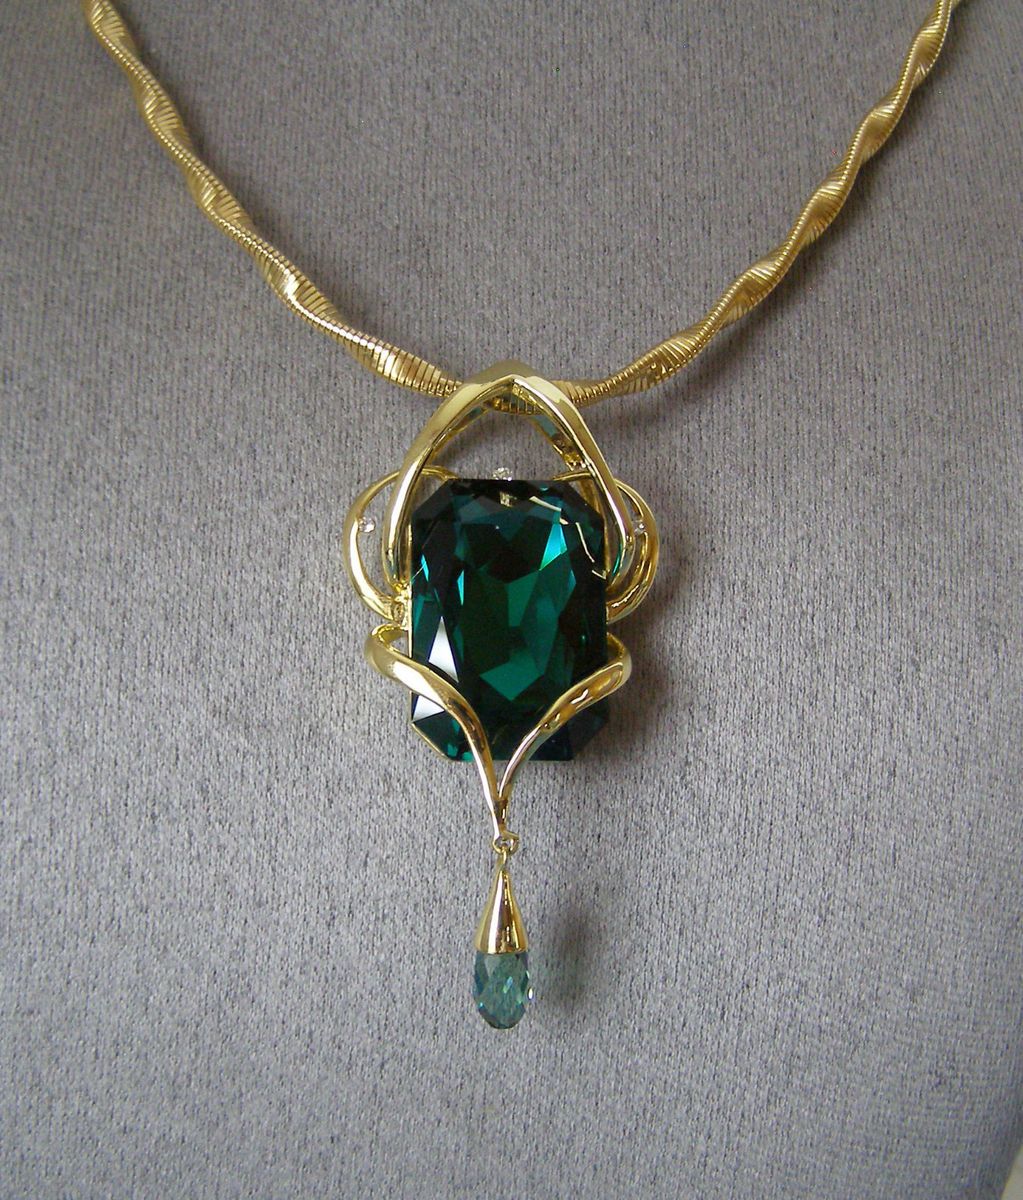 Swarovski Emerald Crystal Elements Pendant Flex Necklace Gold Tone